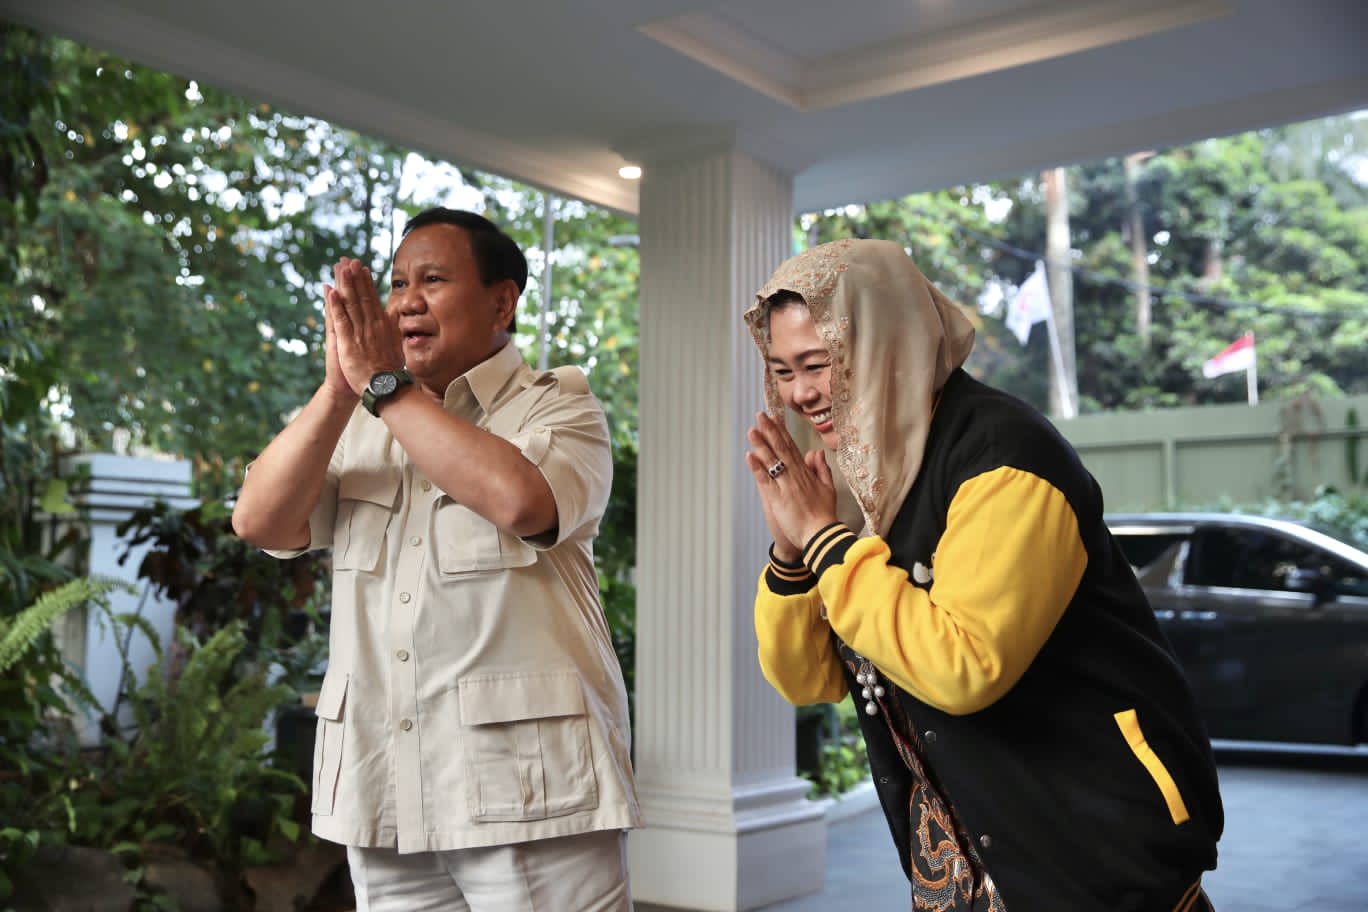 Yenny Wahid Bicara Tentang Prabowo: Masih Pantas Dipanggil 'Mas Bowo'